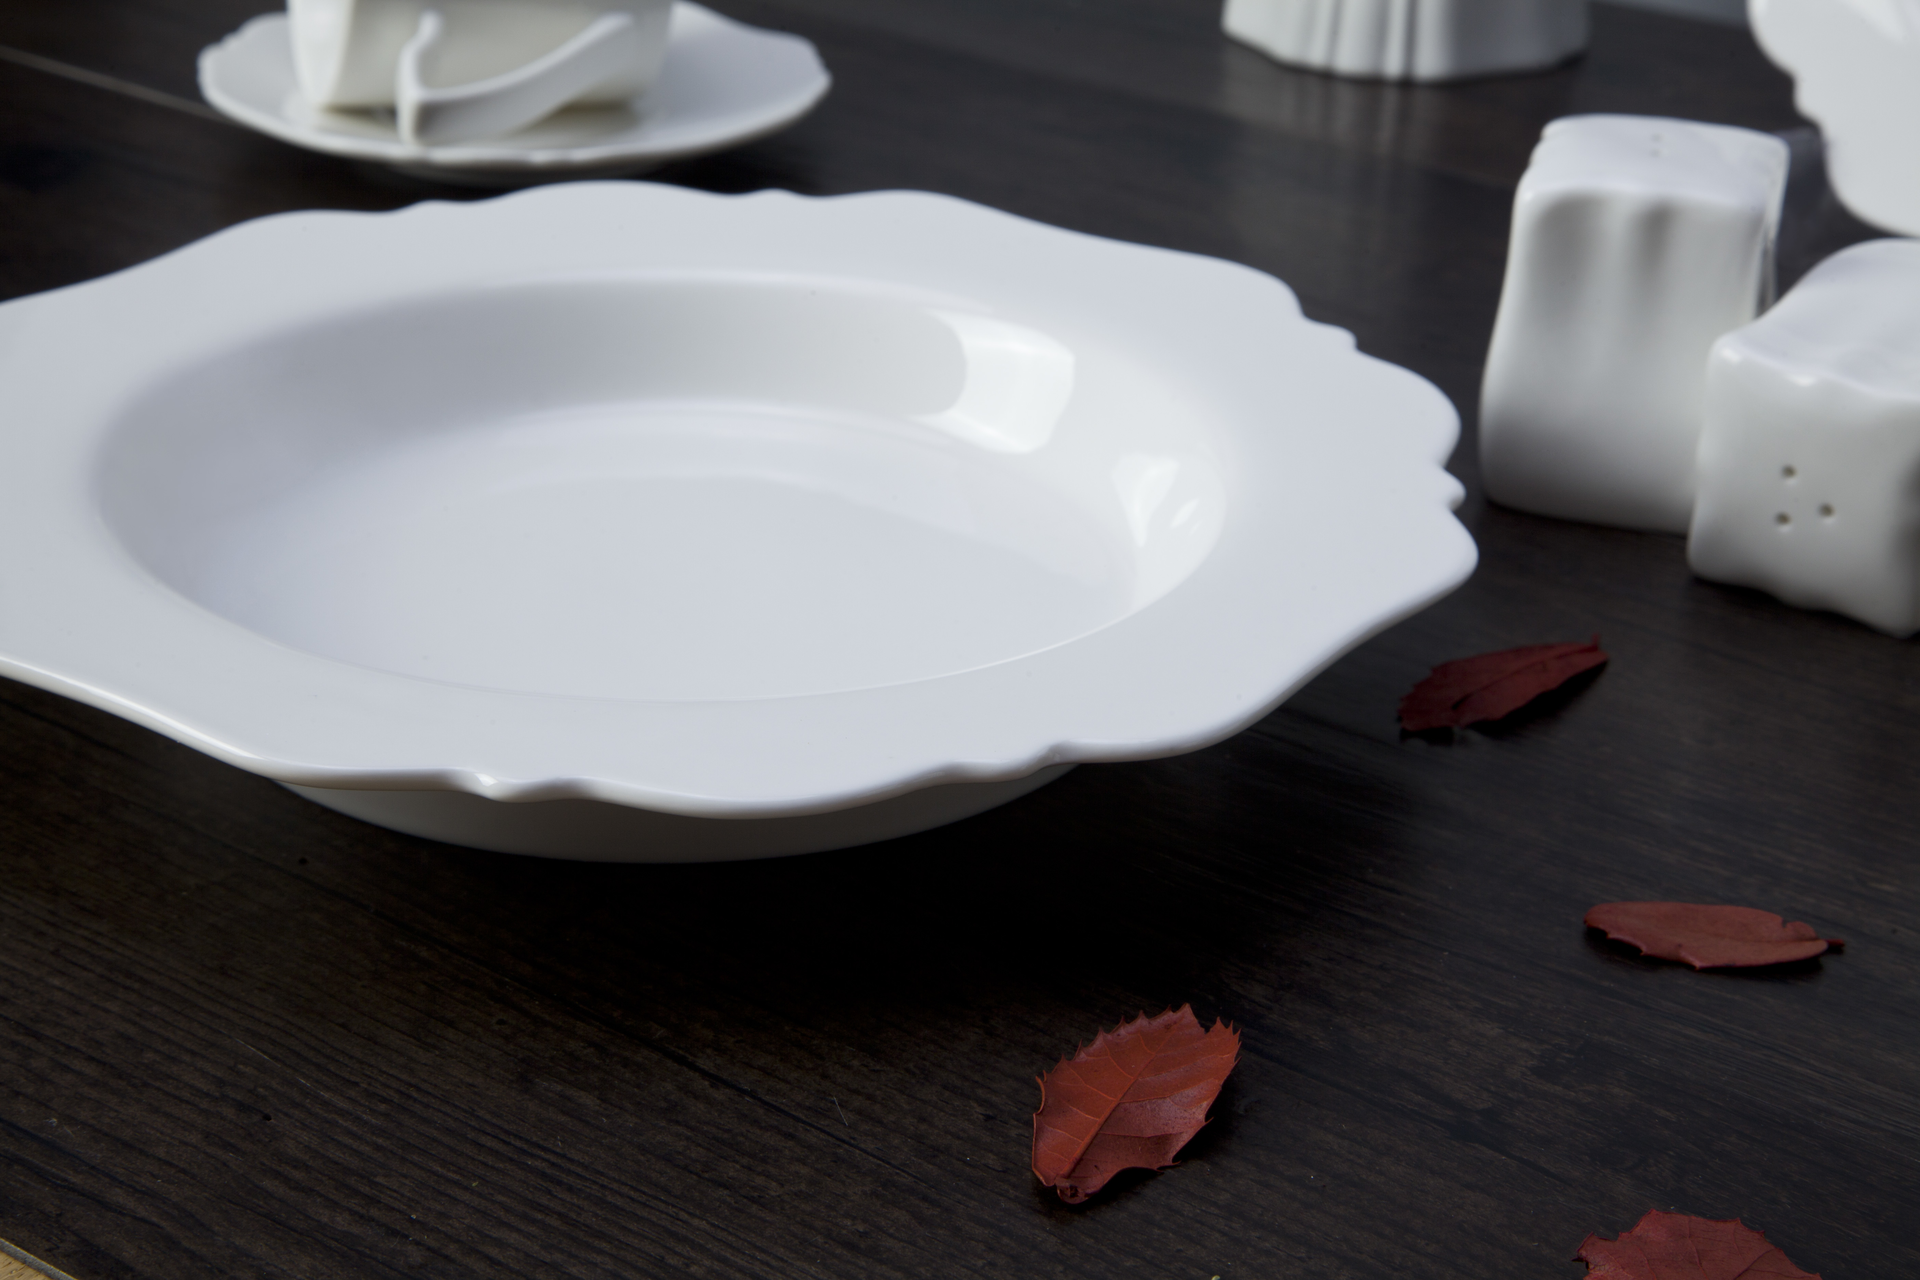 modern raised edge tableware ceramic plates dishes restaurant hotel restaurant tableware